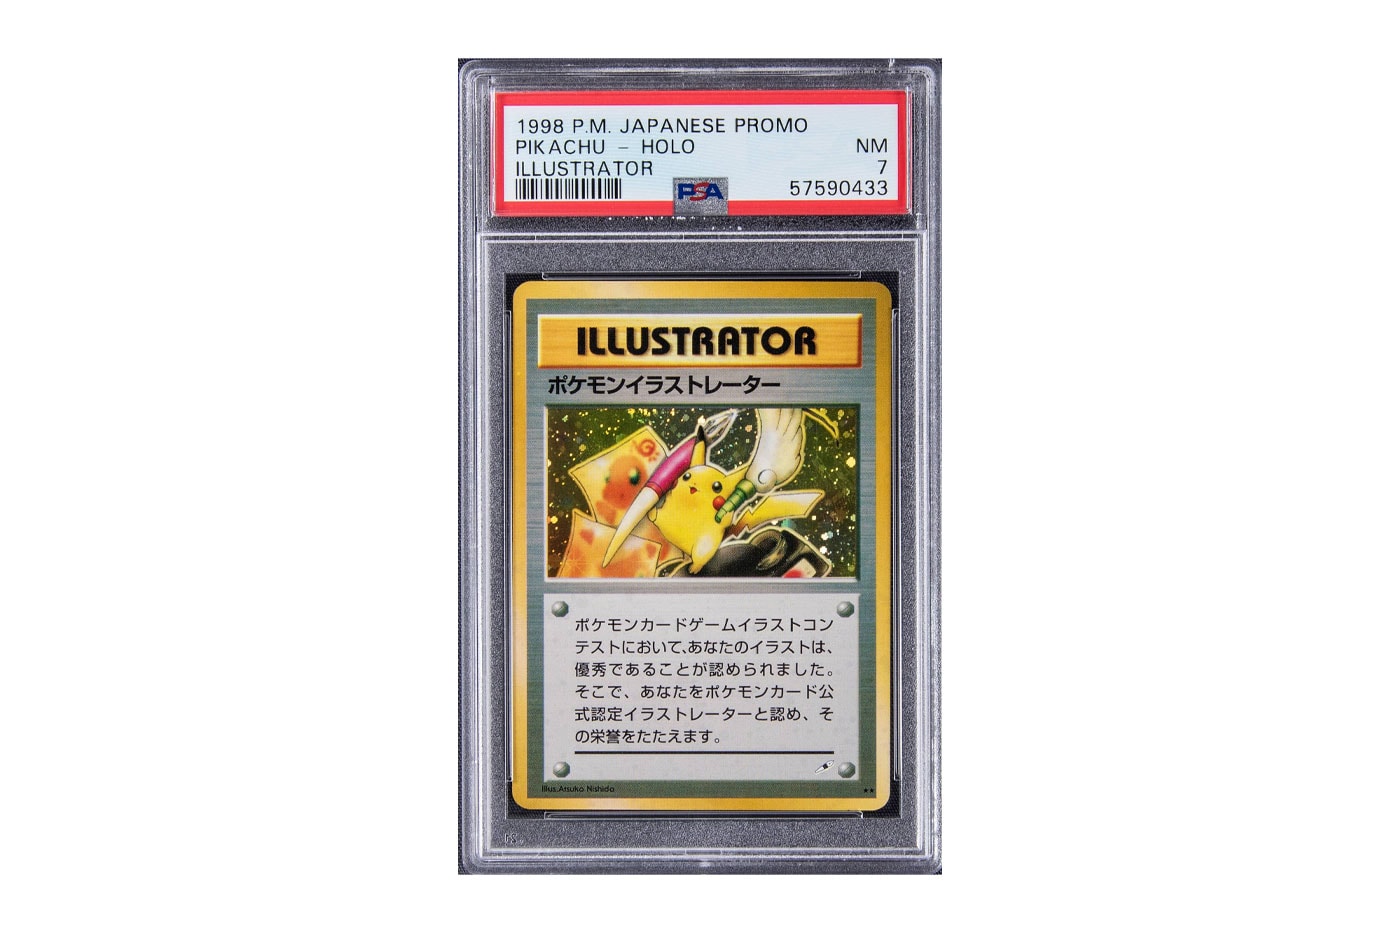 8.8*6.3cm Pokemon Pikachu Illustrator Cards Pikachu Collection